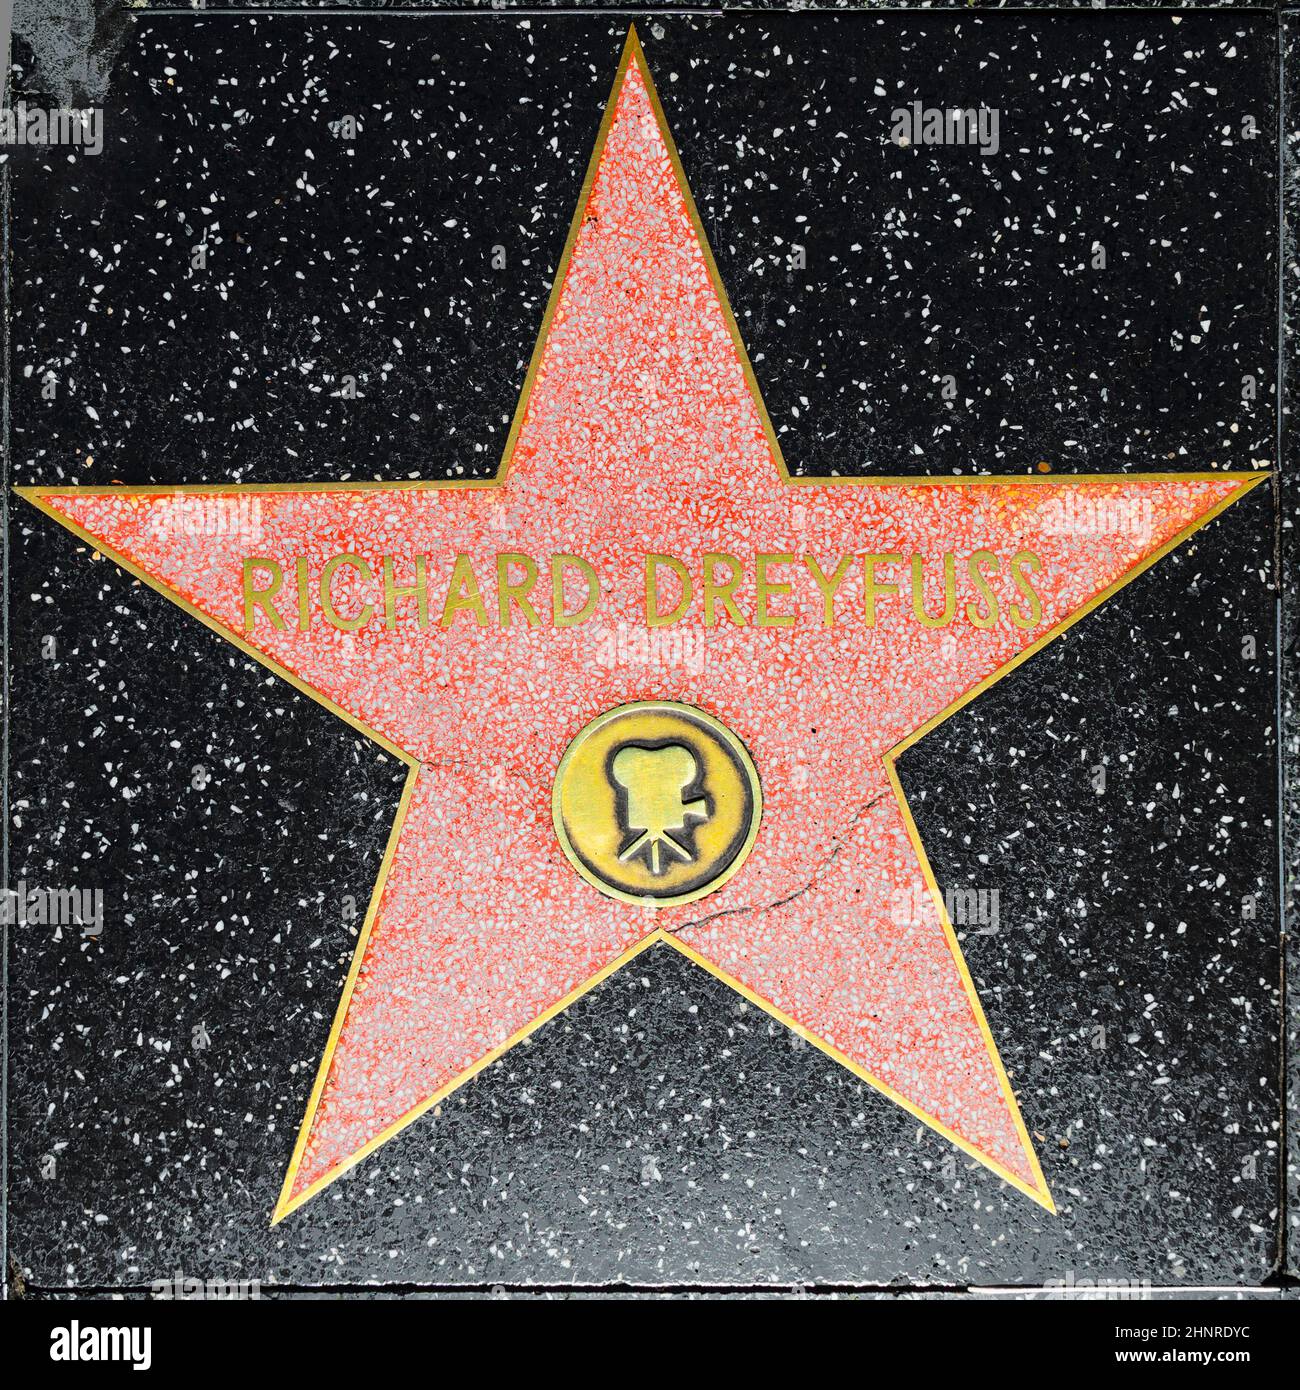 Richard Dreyfuss star on Hollywood Walk of Fame Stock Photo